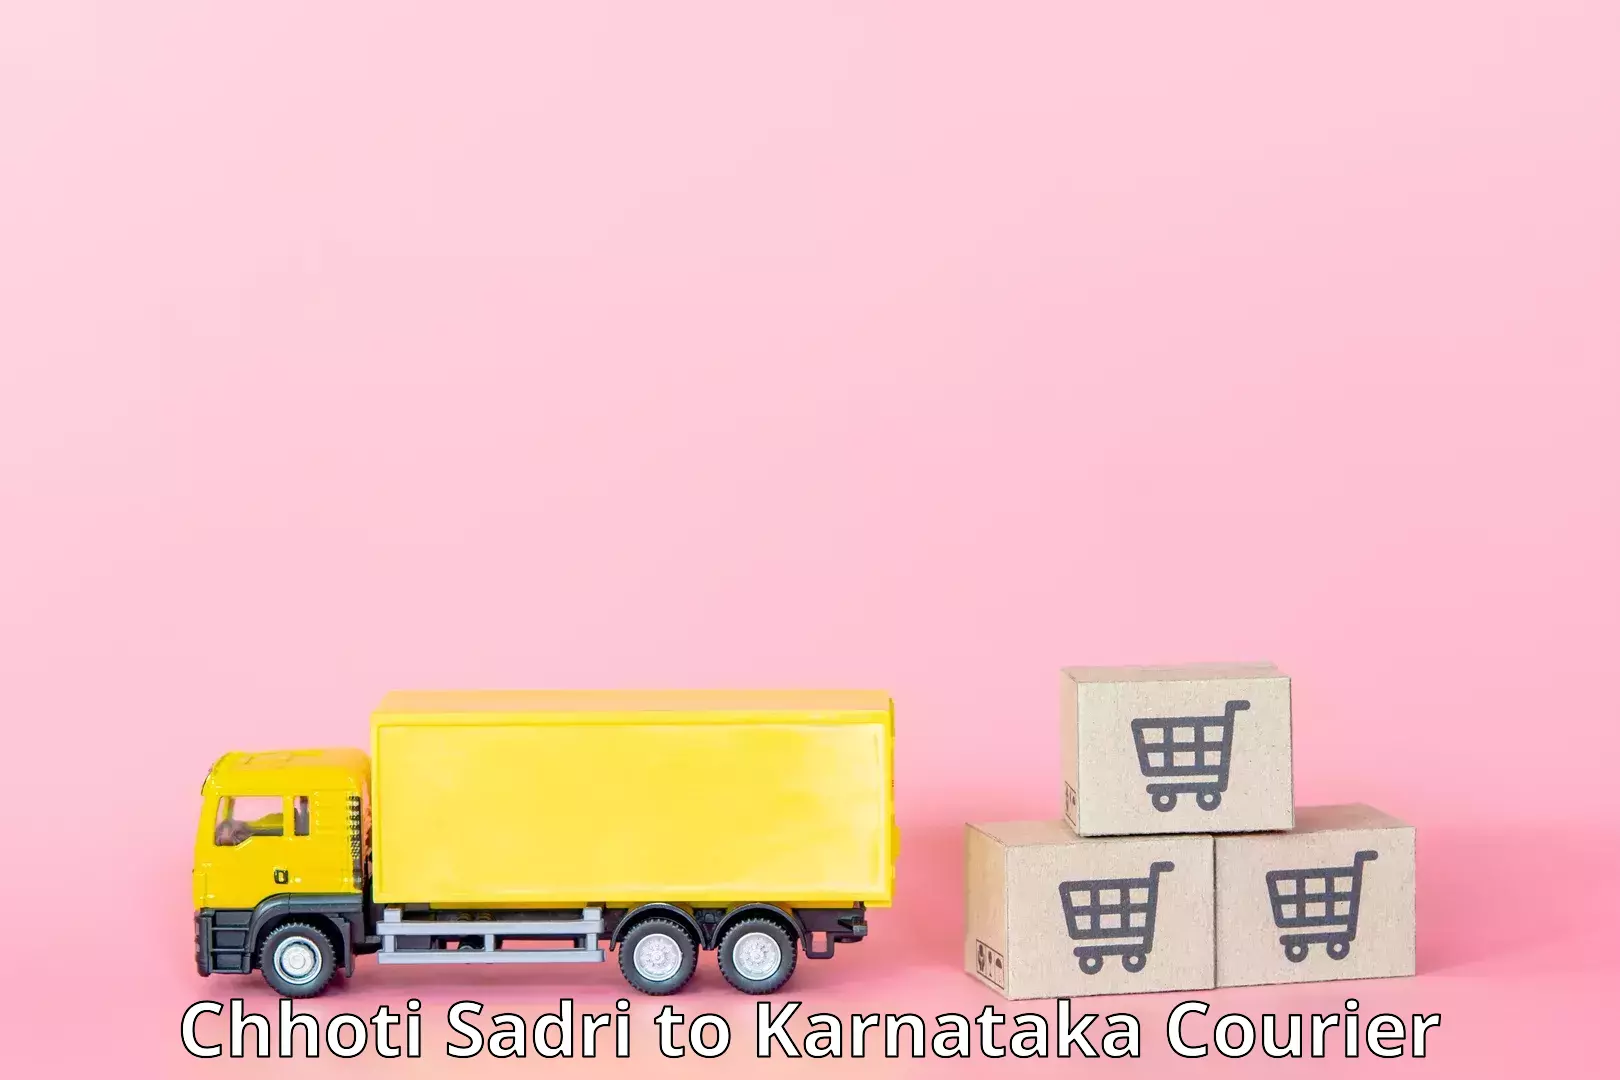 Parcel handling and care Chhoti Sadri to Karnataka